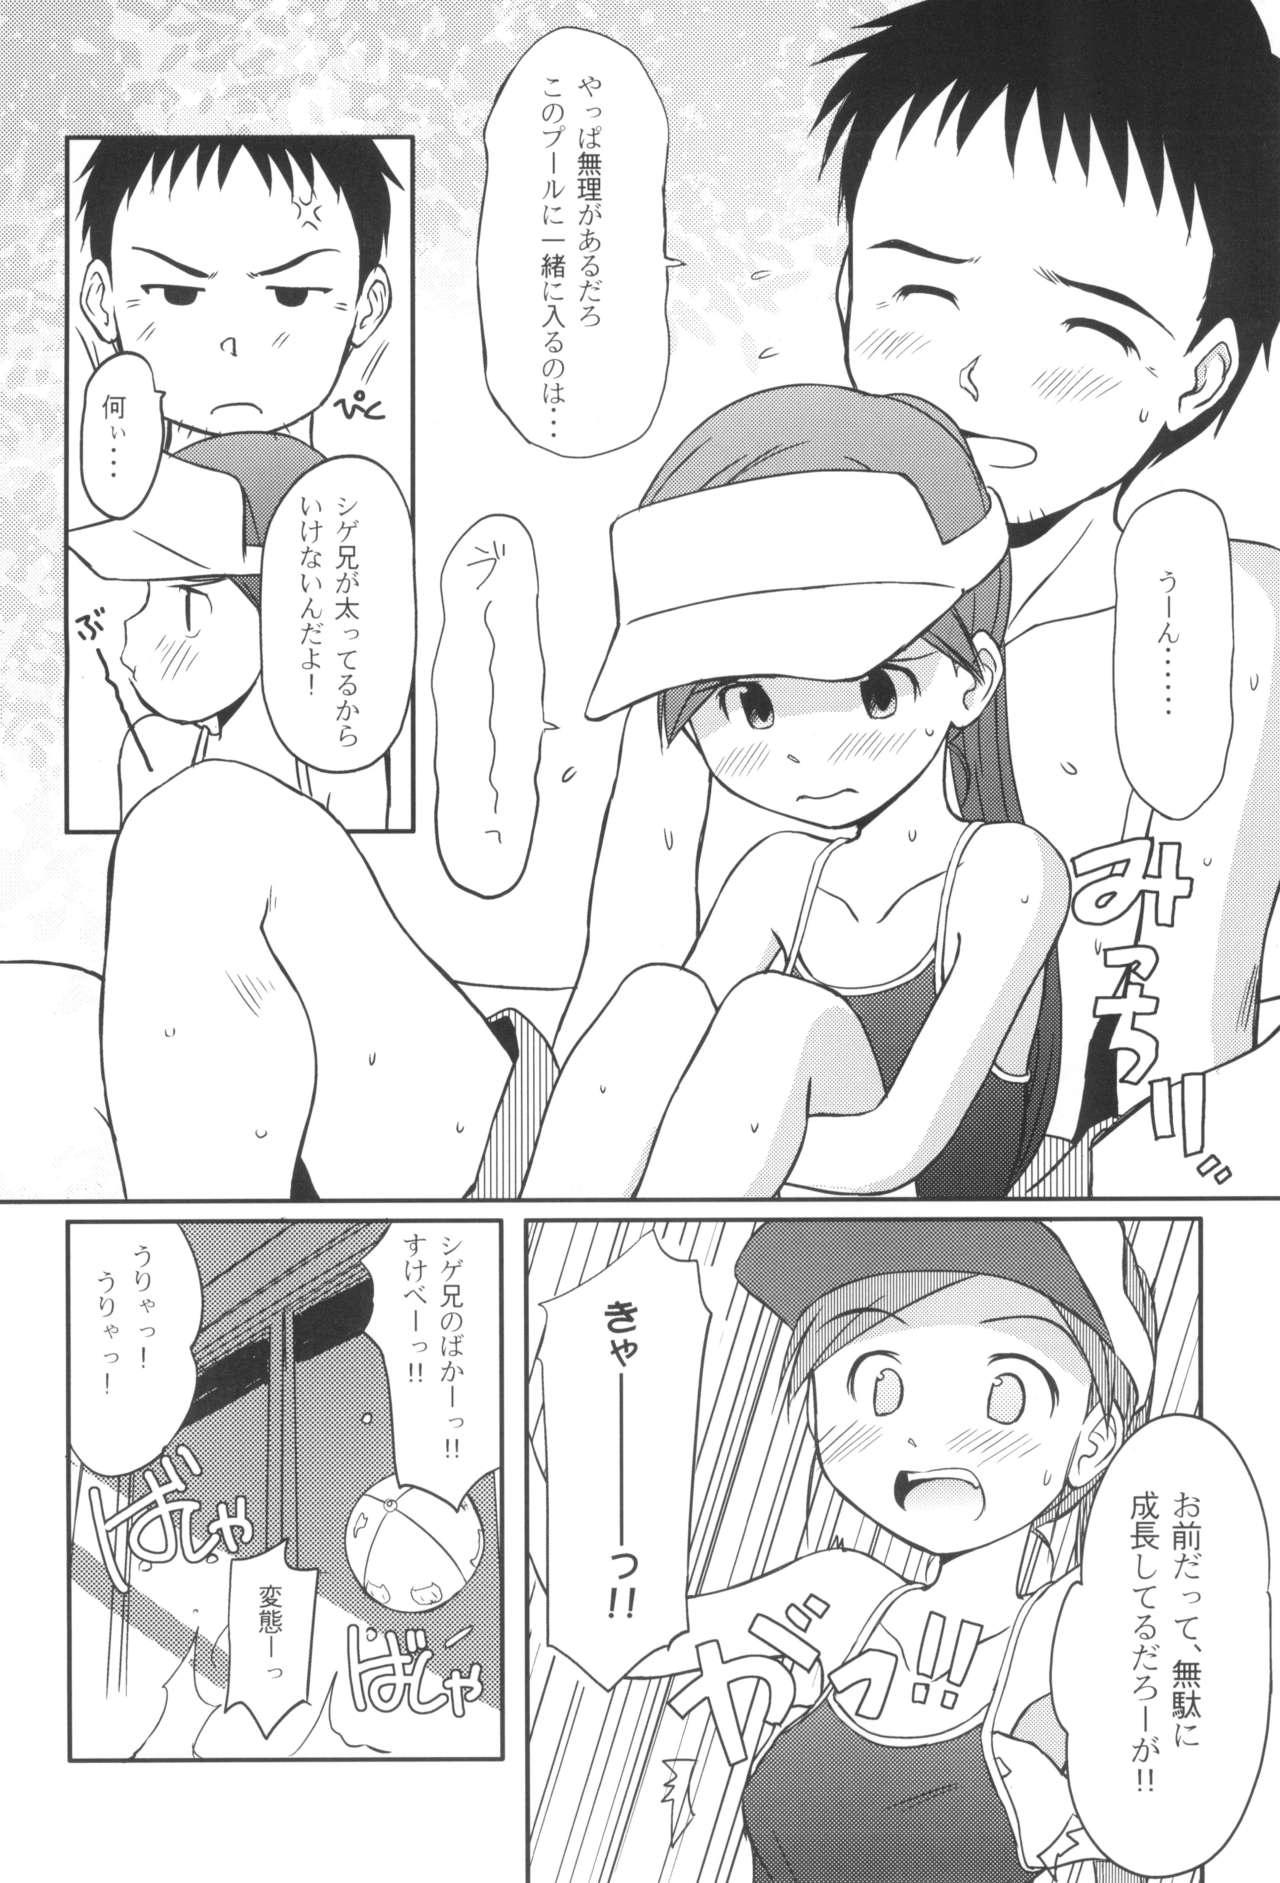 Funny Suisuisuika - Original Time - Page 8